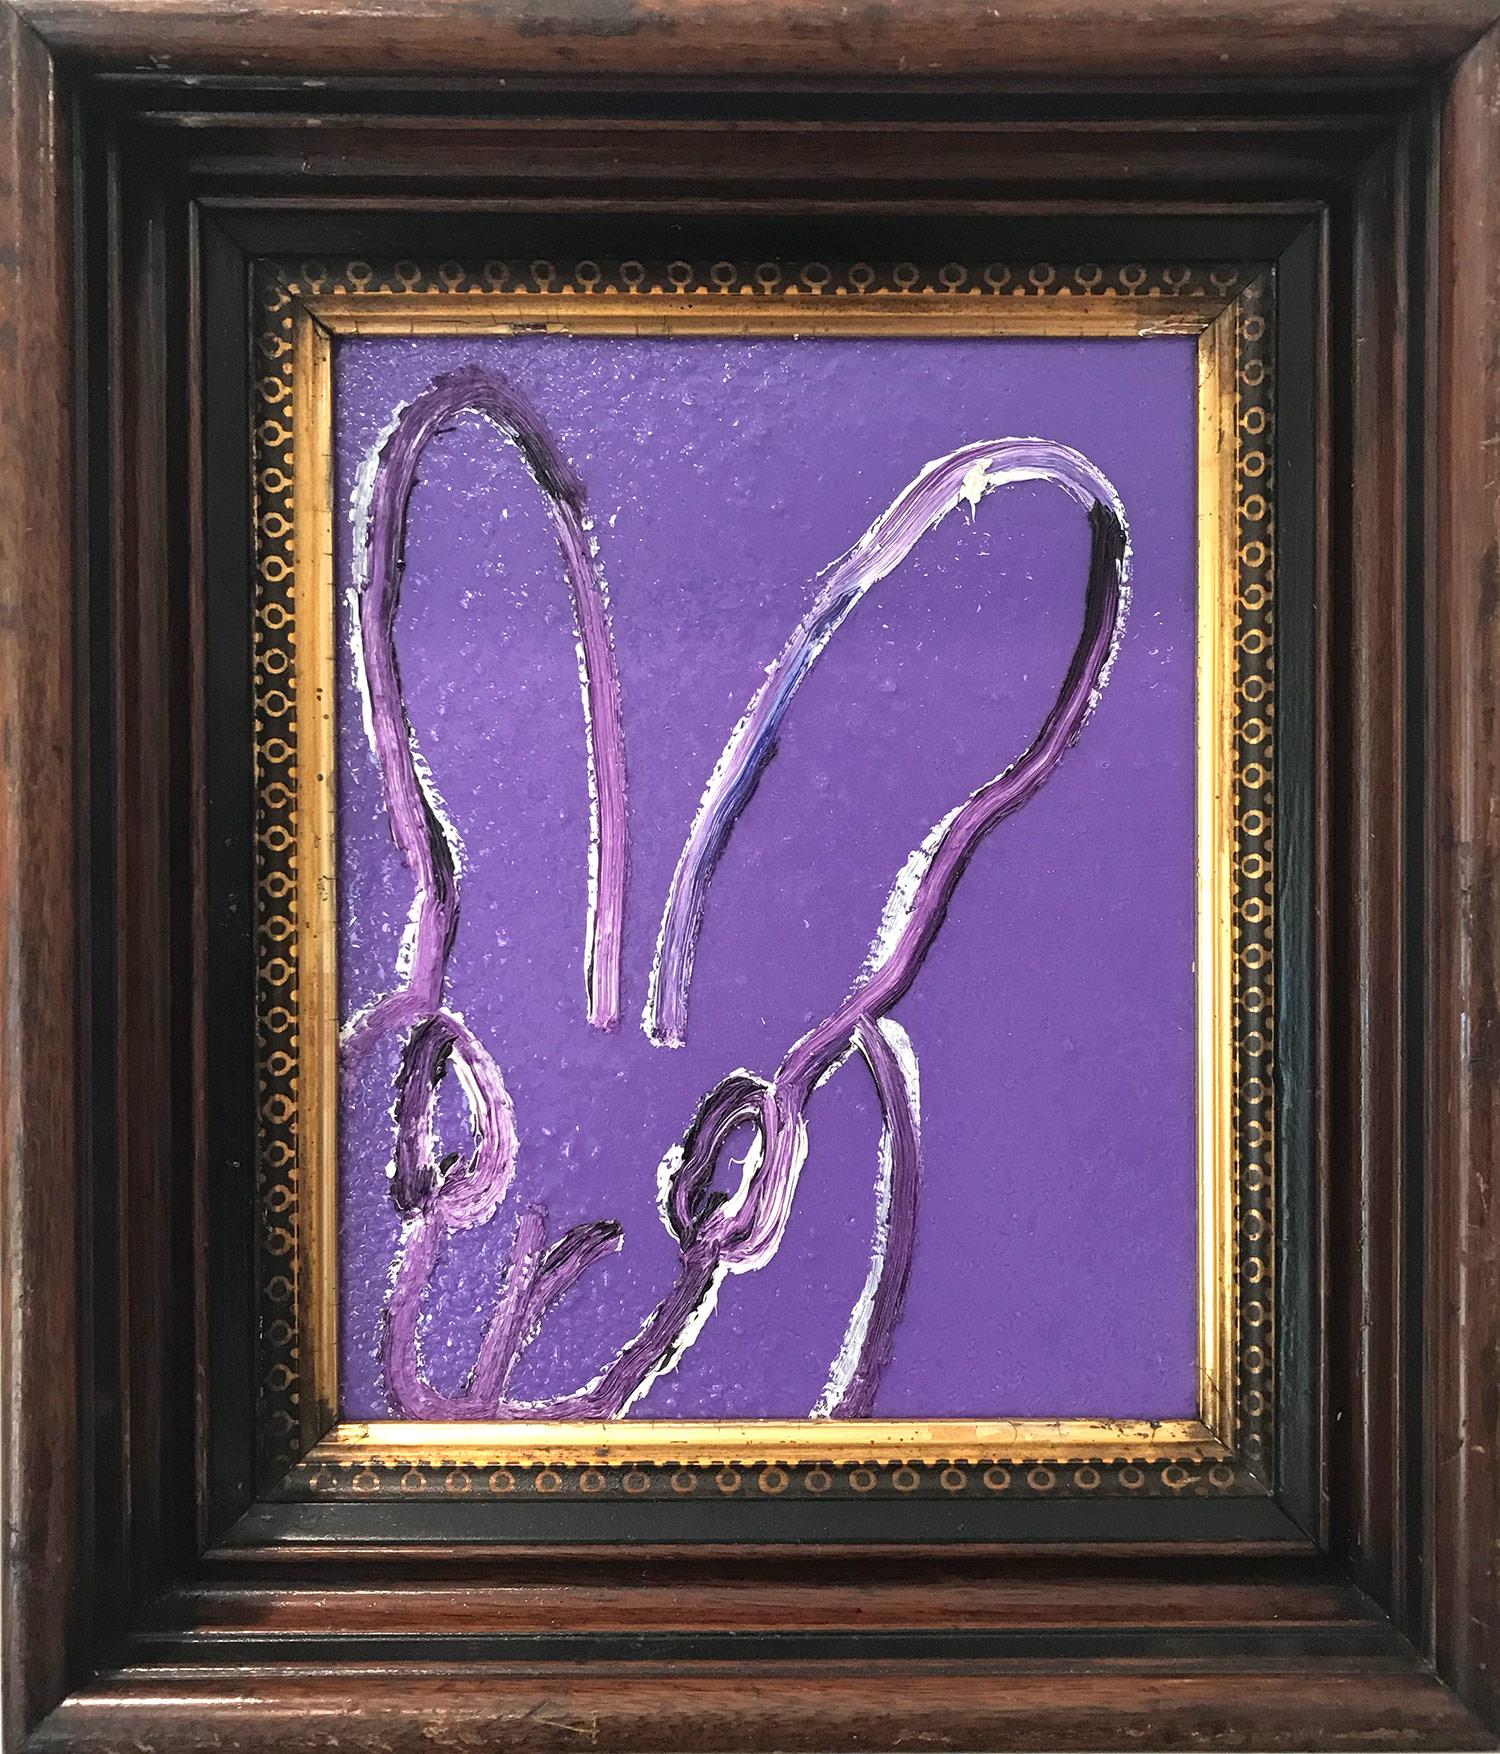 Hunt Slonem Abstract Painting - "Viola 2" (Bunny on Purple Diamond Dust Background) Oil Painting on Wood Panel